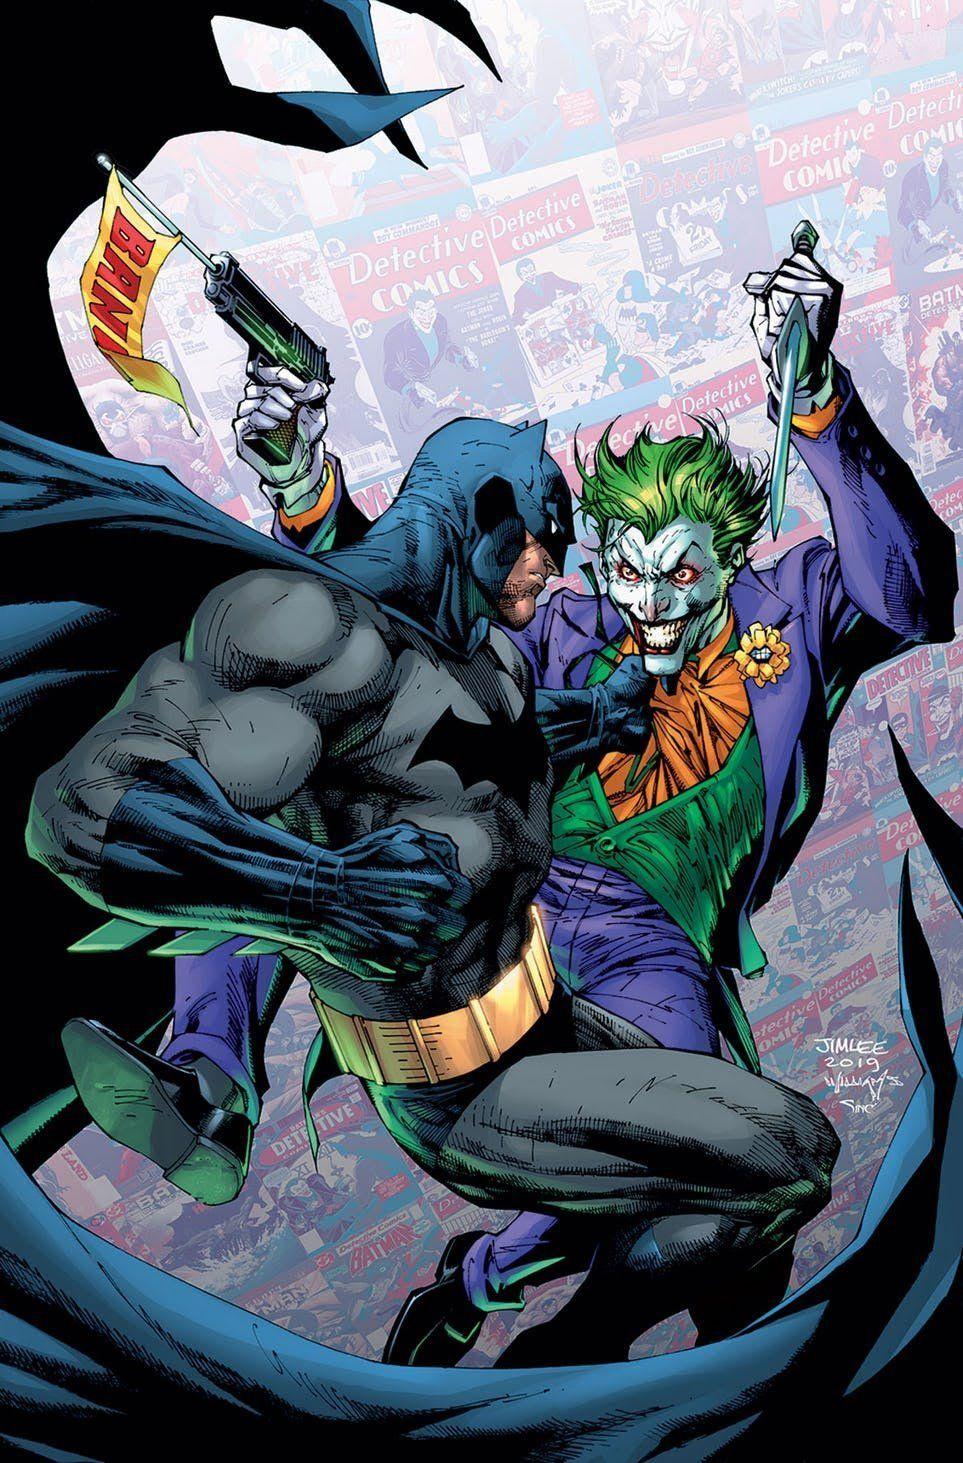 illustrated by: Jim Lee Scott Williams. Batman comic art, Batman vs joker, Joker comic